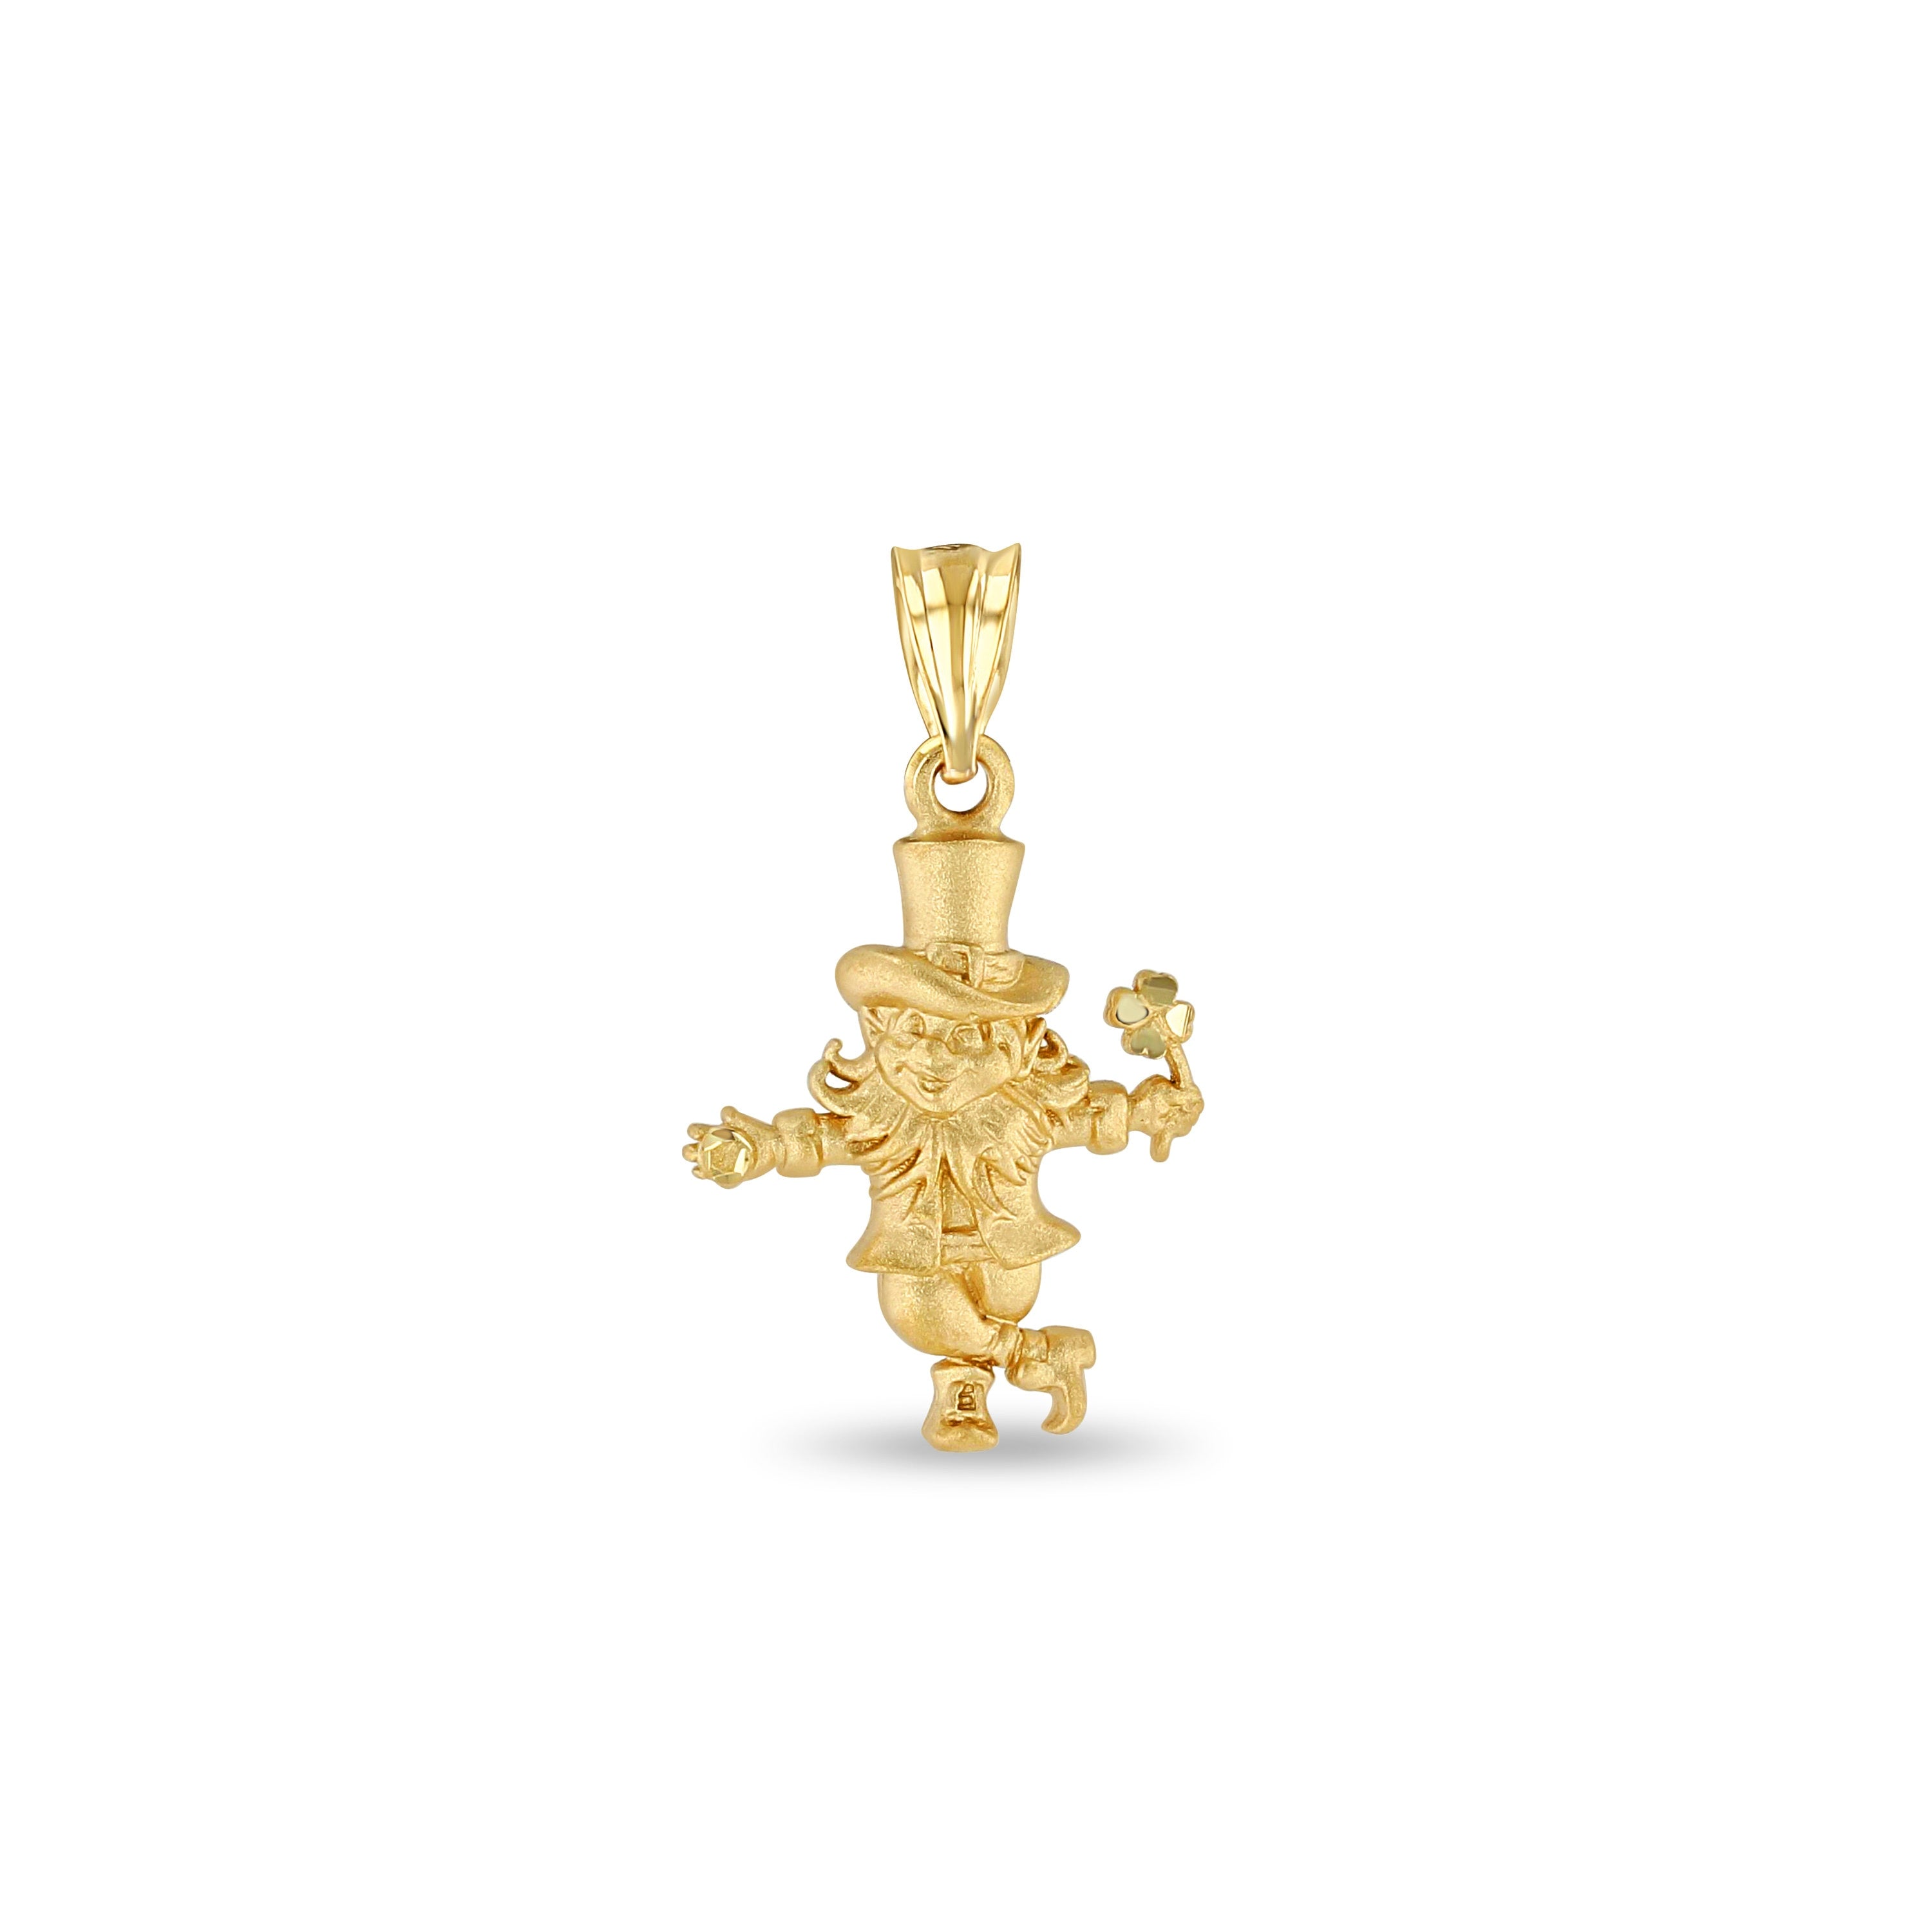 14k solid gold Leprechaun pendant holding clover